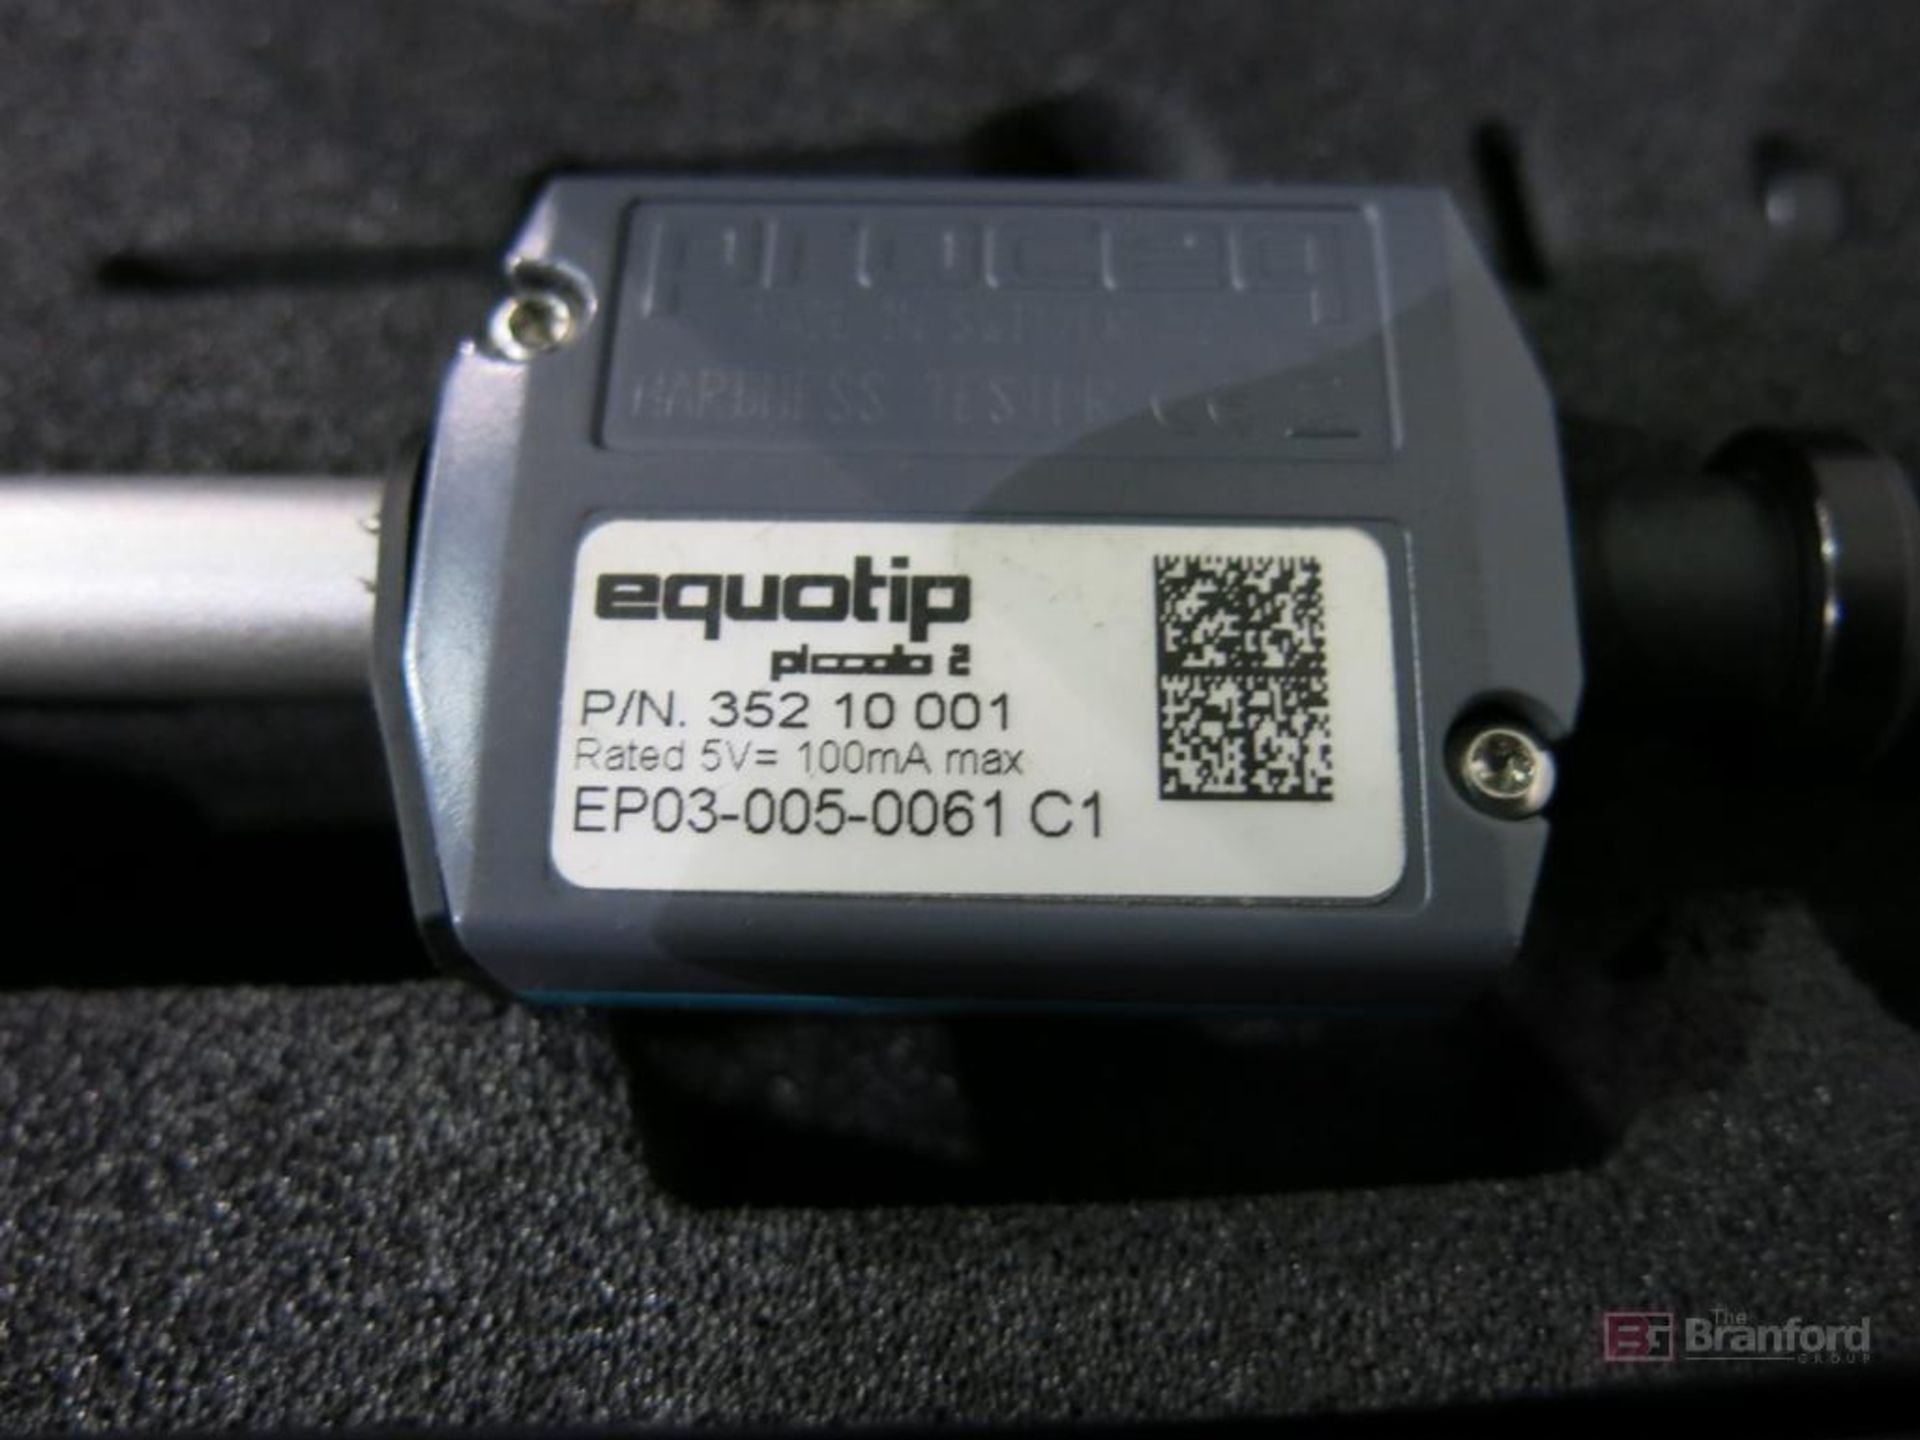 Proceq P/N 352 10 001 Digital Portable Hardness Tester - Image 2 of 2